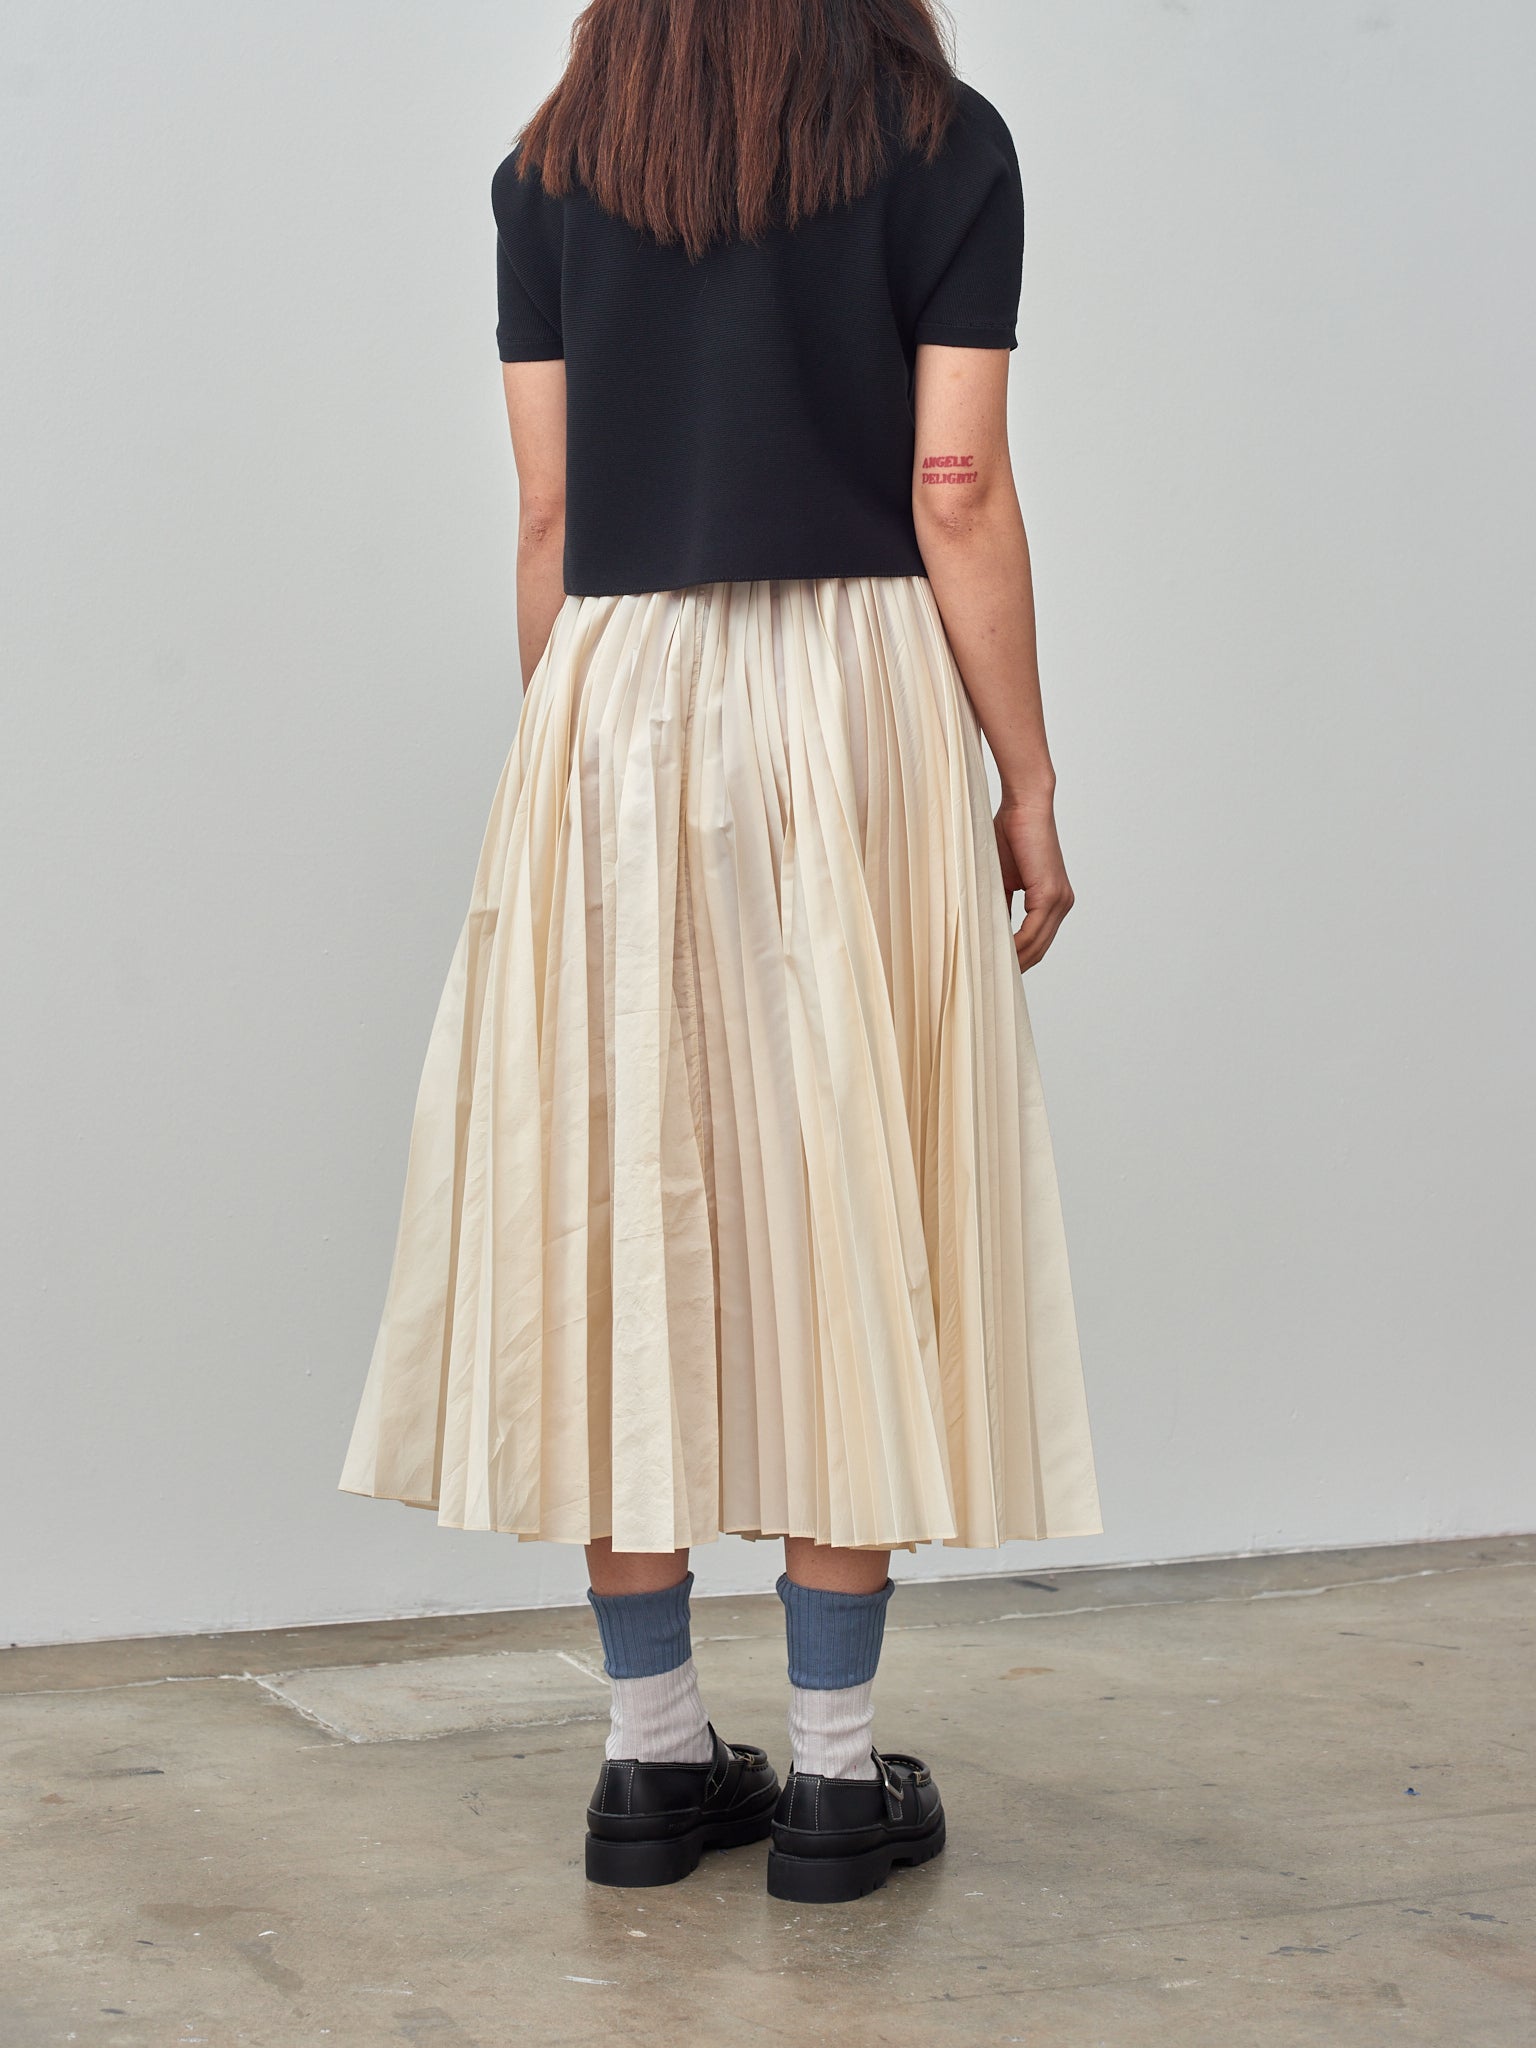 Namu Shop - Sara Lanzi Washed Taffeta Pleated Skirt - Ivory